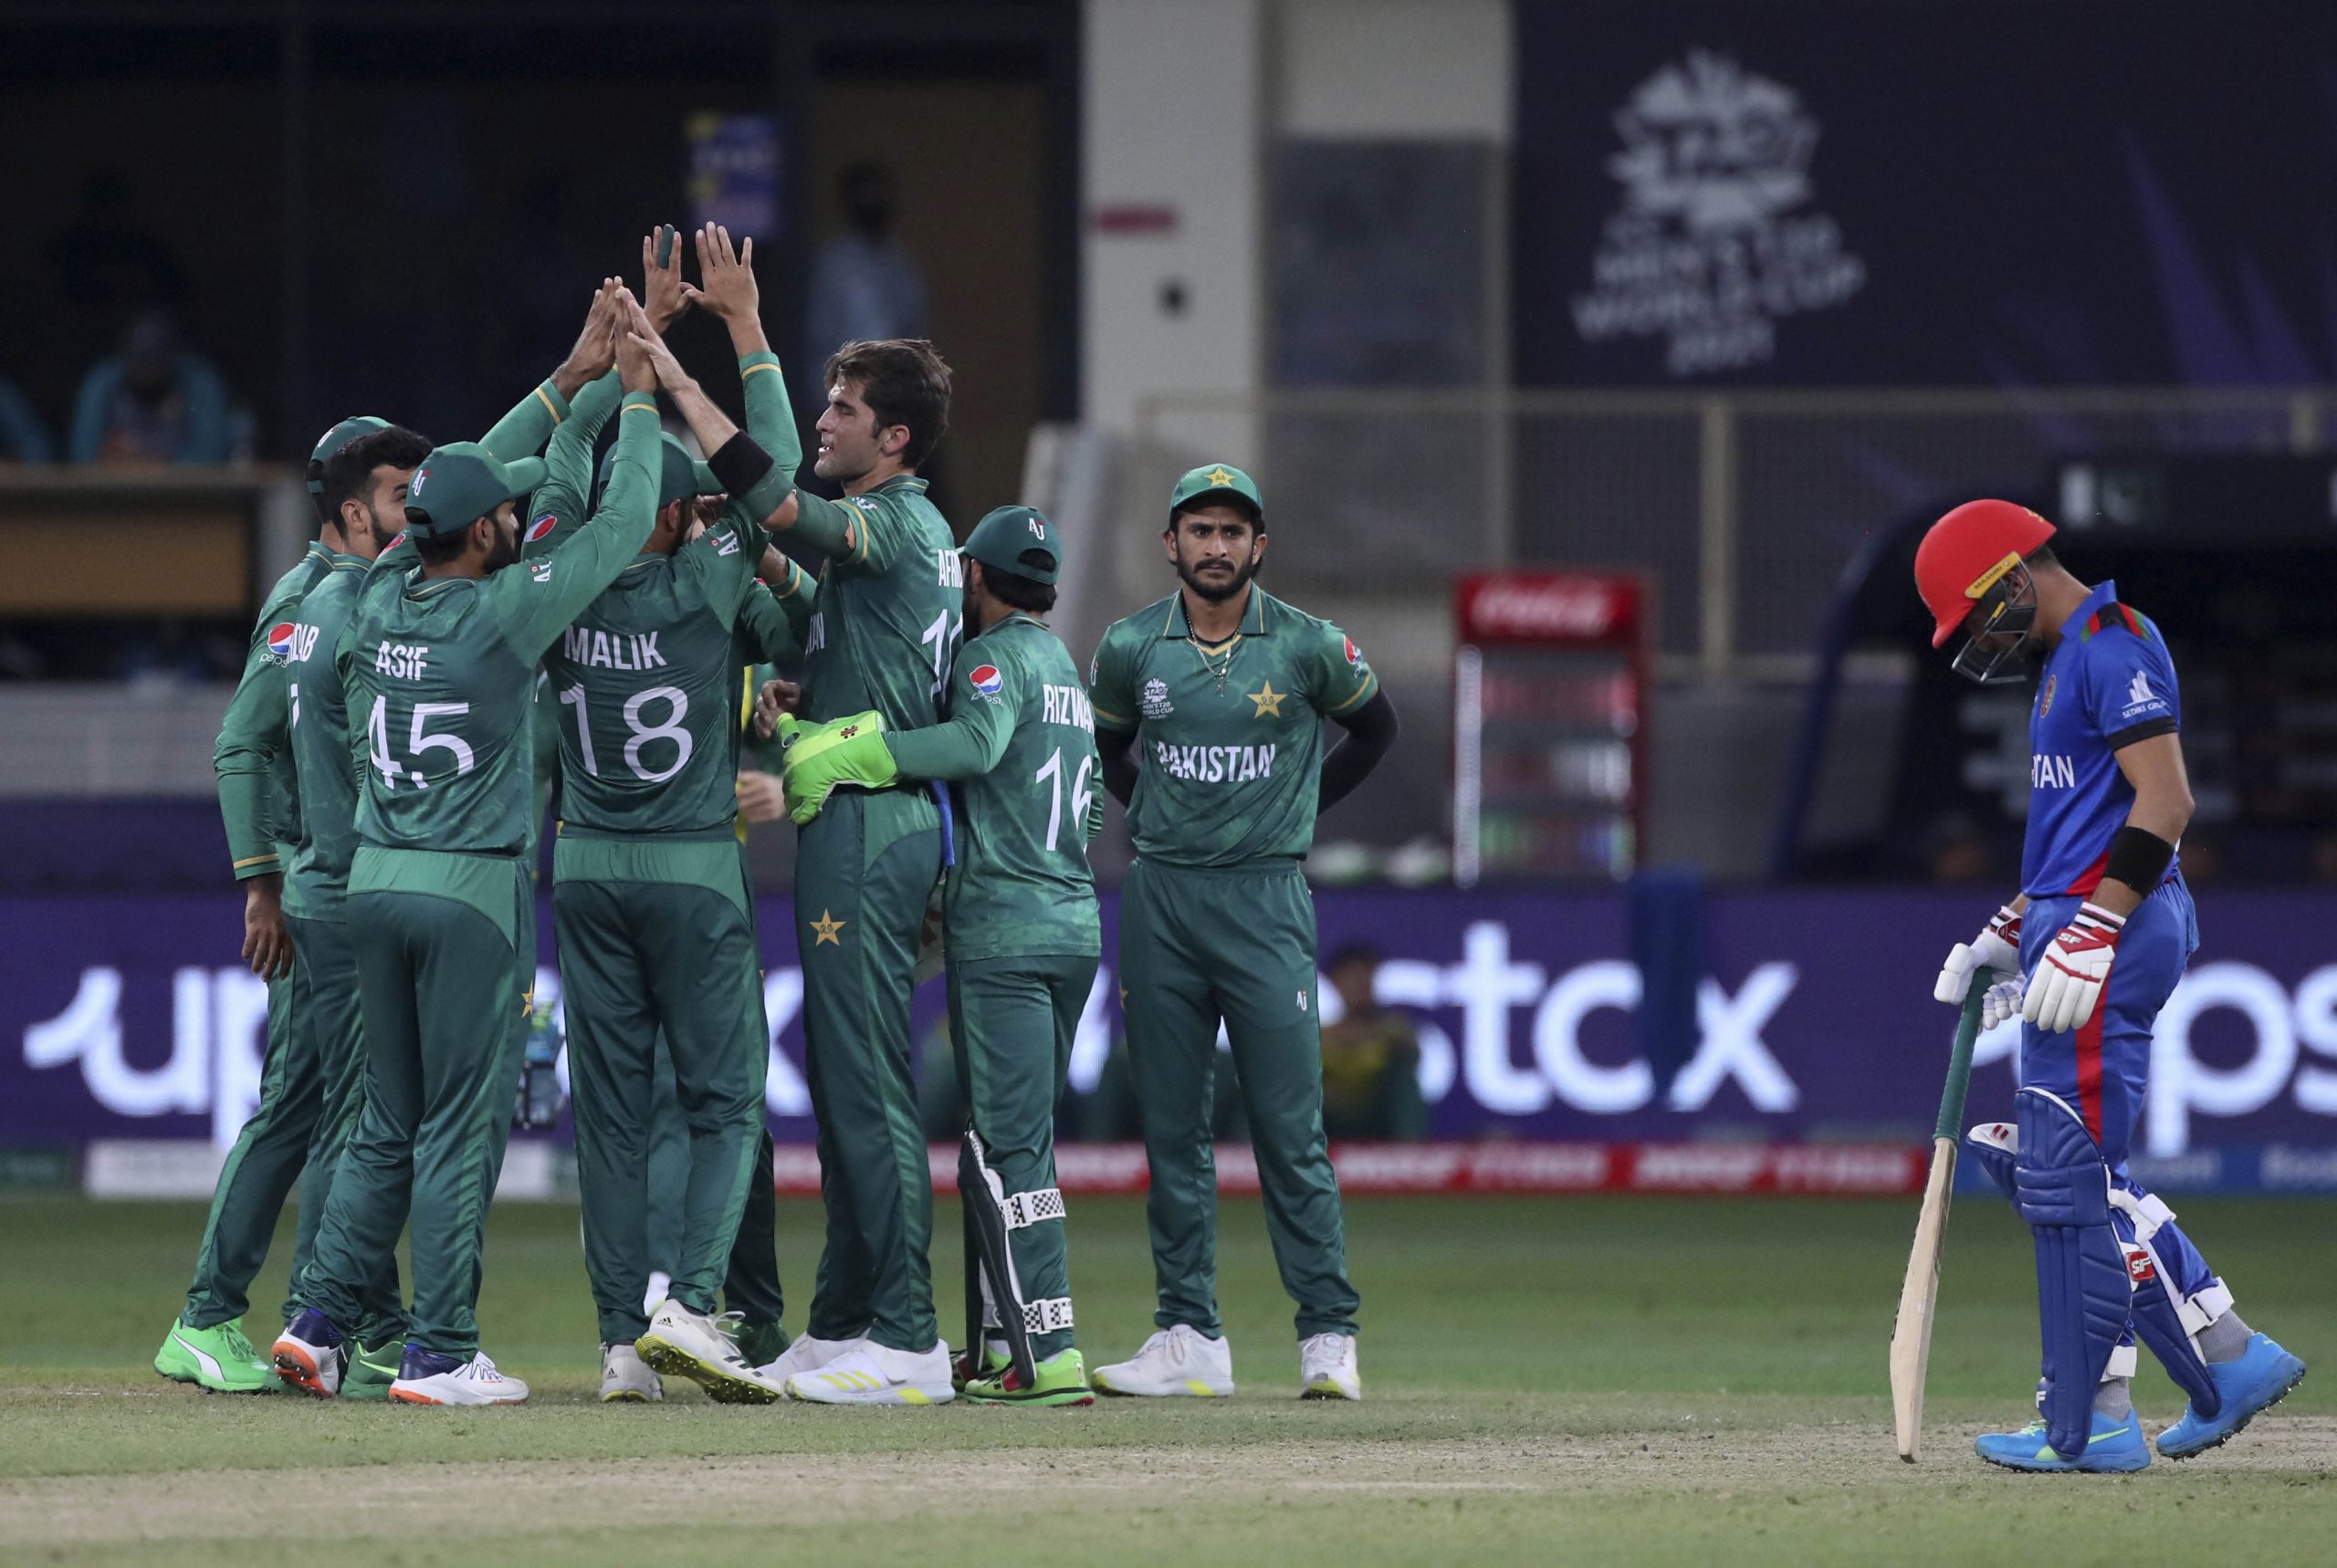 T20 World Cup: Juggernaut Pakistan 1 win away from semis berth, face Namibia